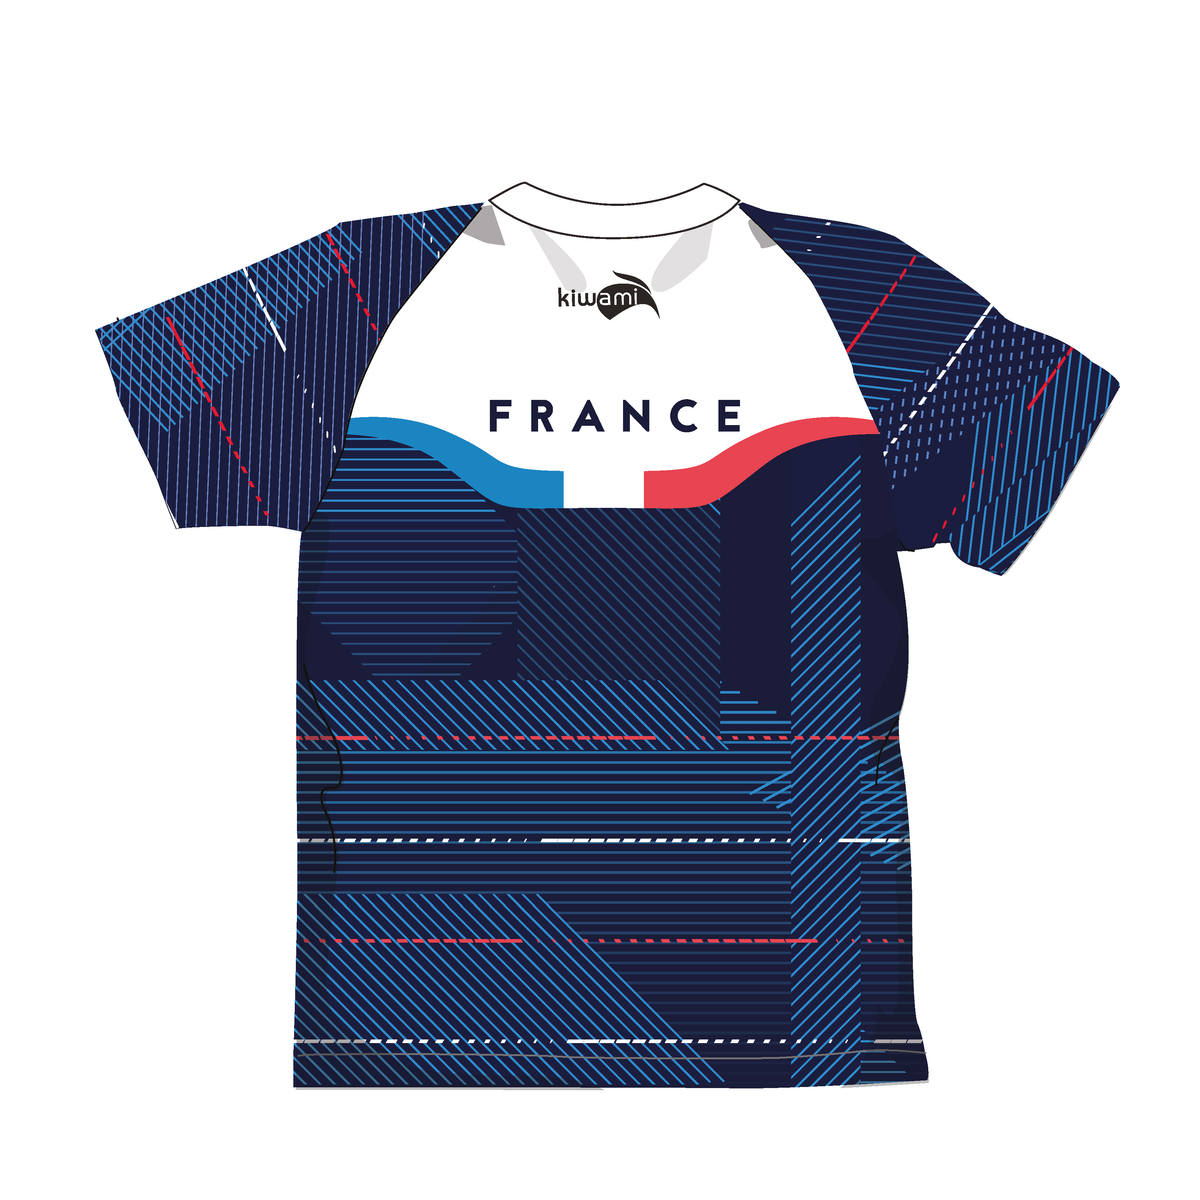 Tee-shirt technique running France Kiwami sports